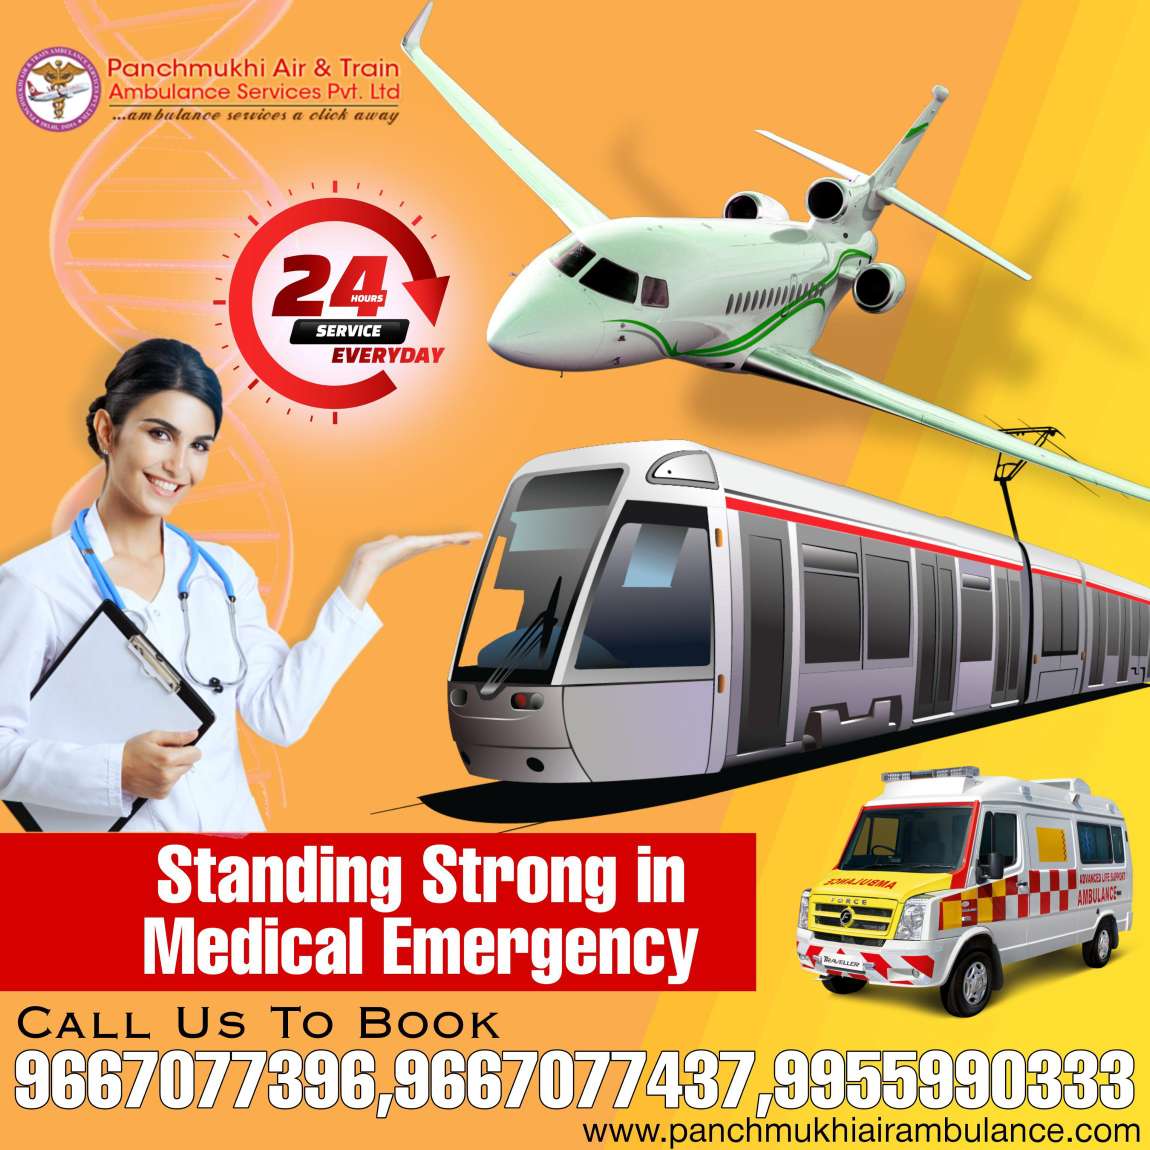 Top Air Ambulance Service in Kolkata